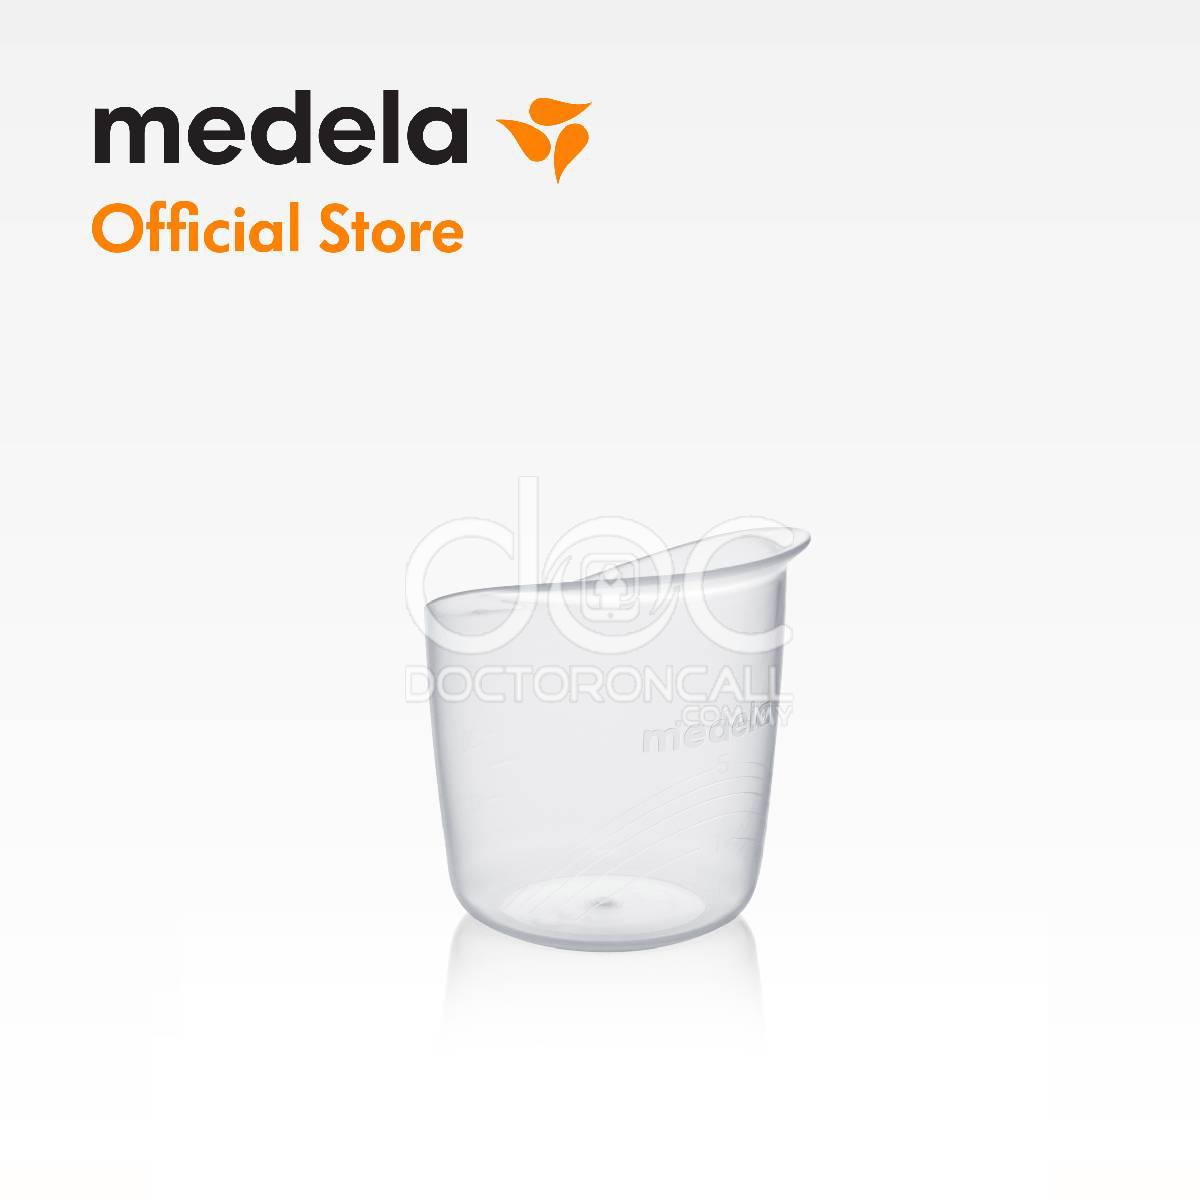 Medela Disposable Baby Cup Feeder 10s - DoctorOnCall Farmasi Online